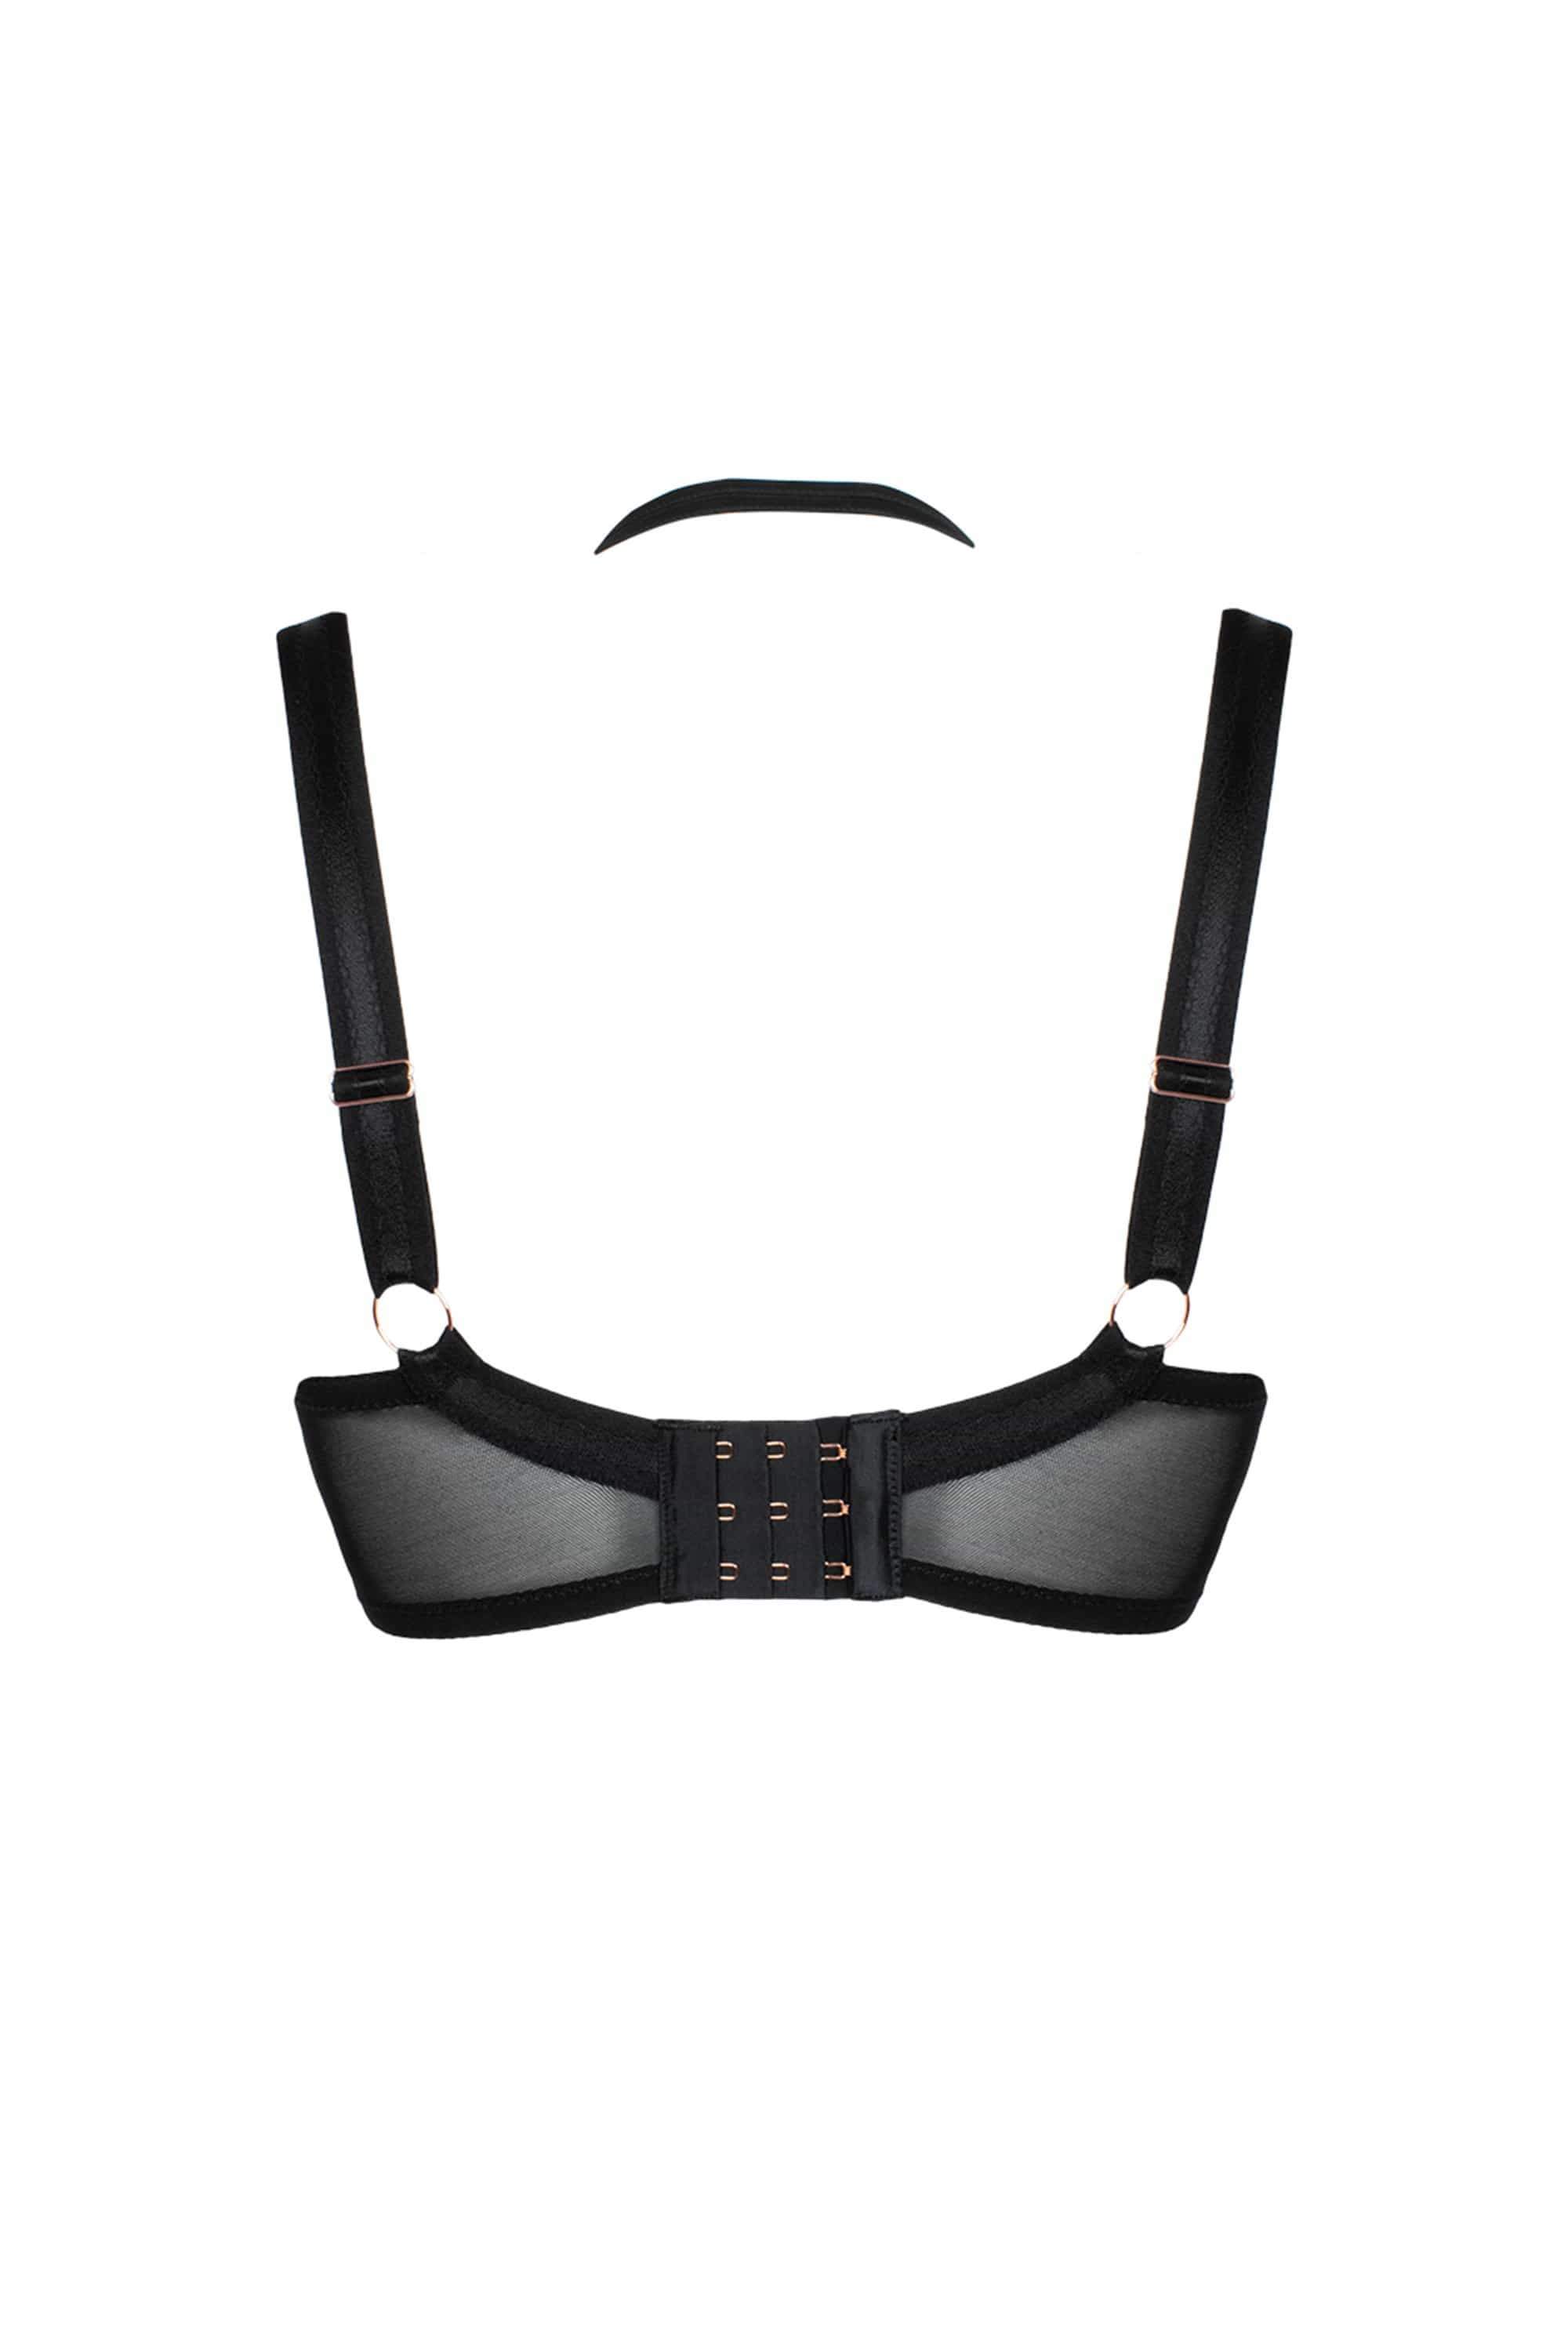 Buy Scantilly Black Harnessed Padded Half Cup Bra 32H online